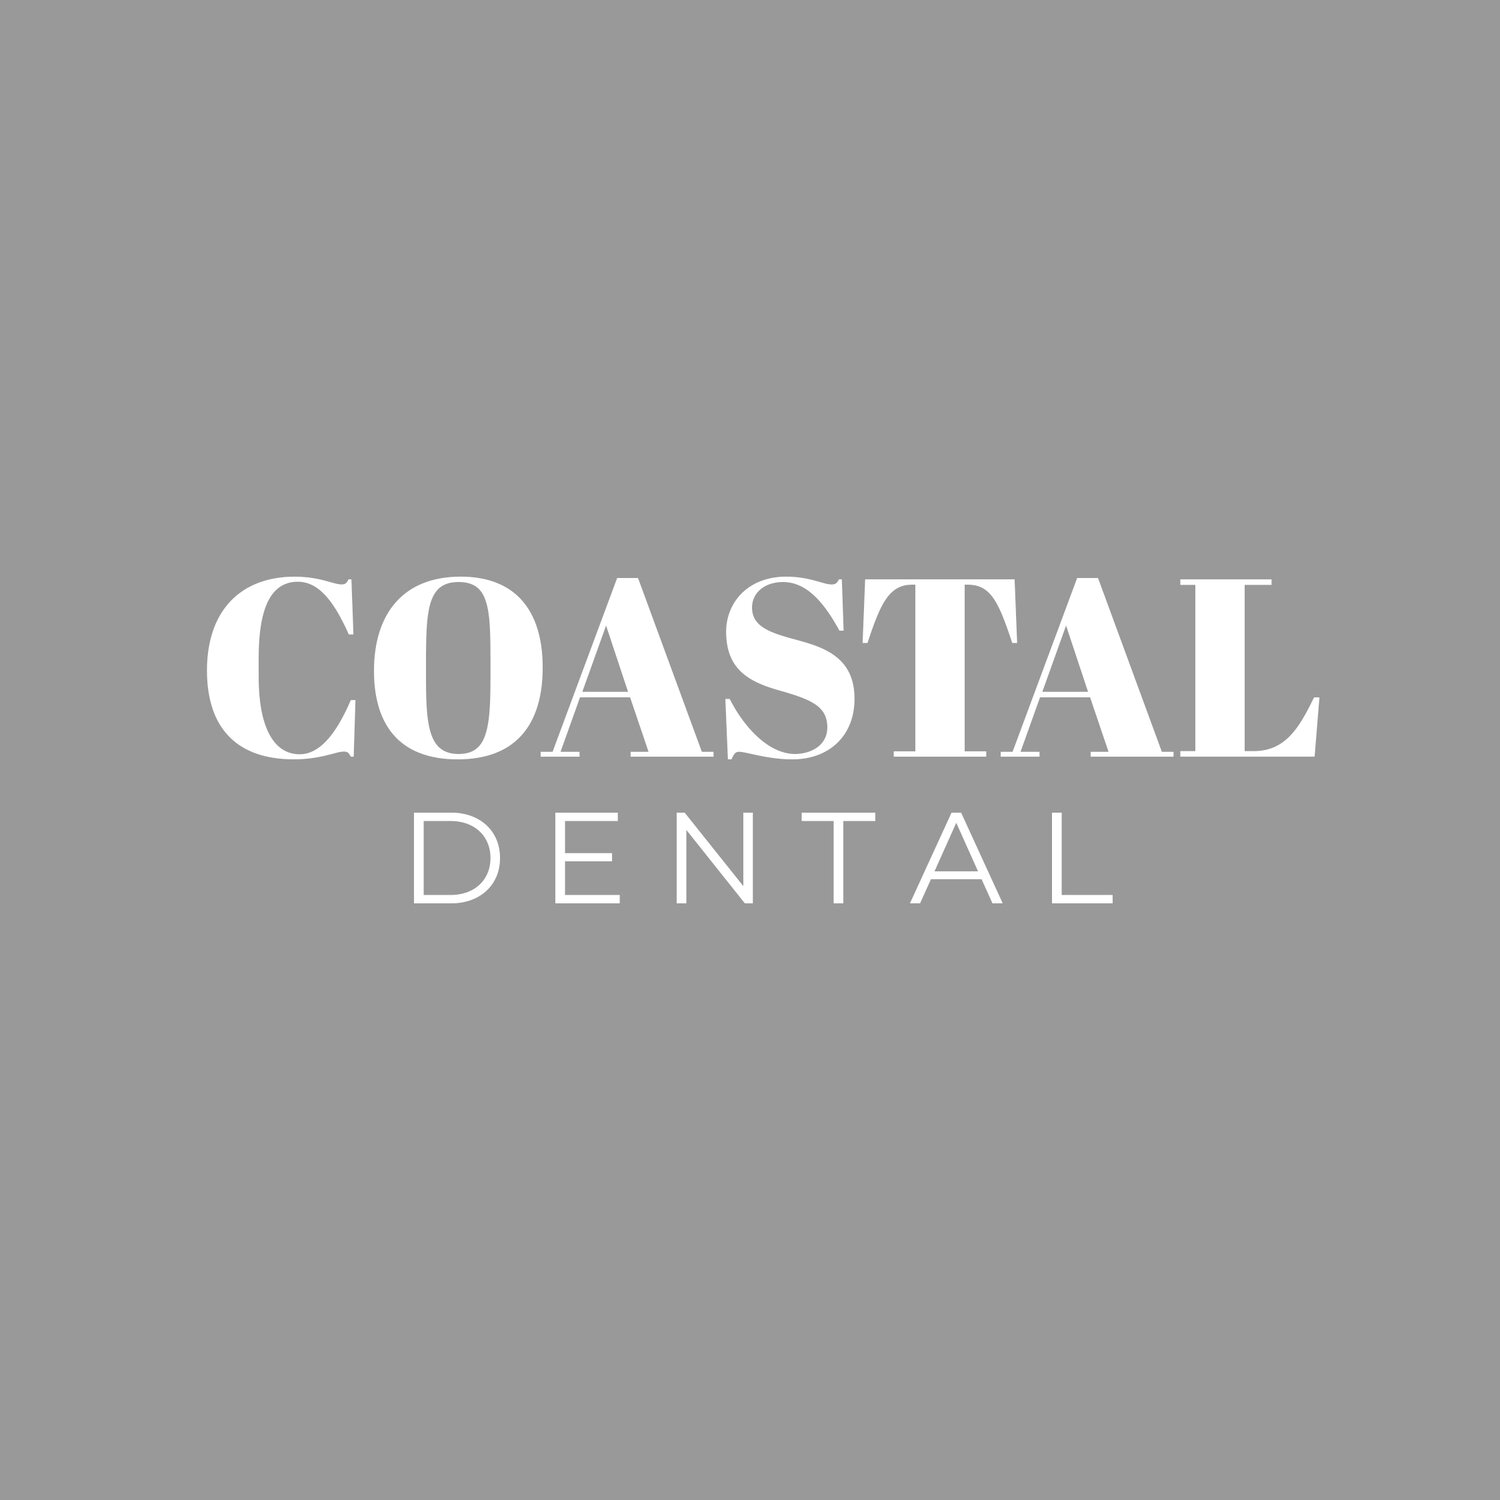 Coastal Dental